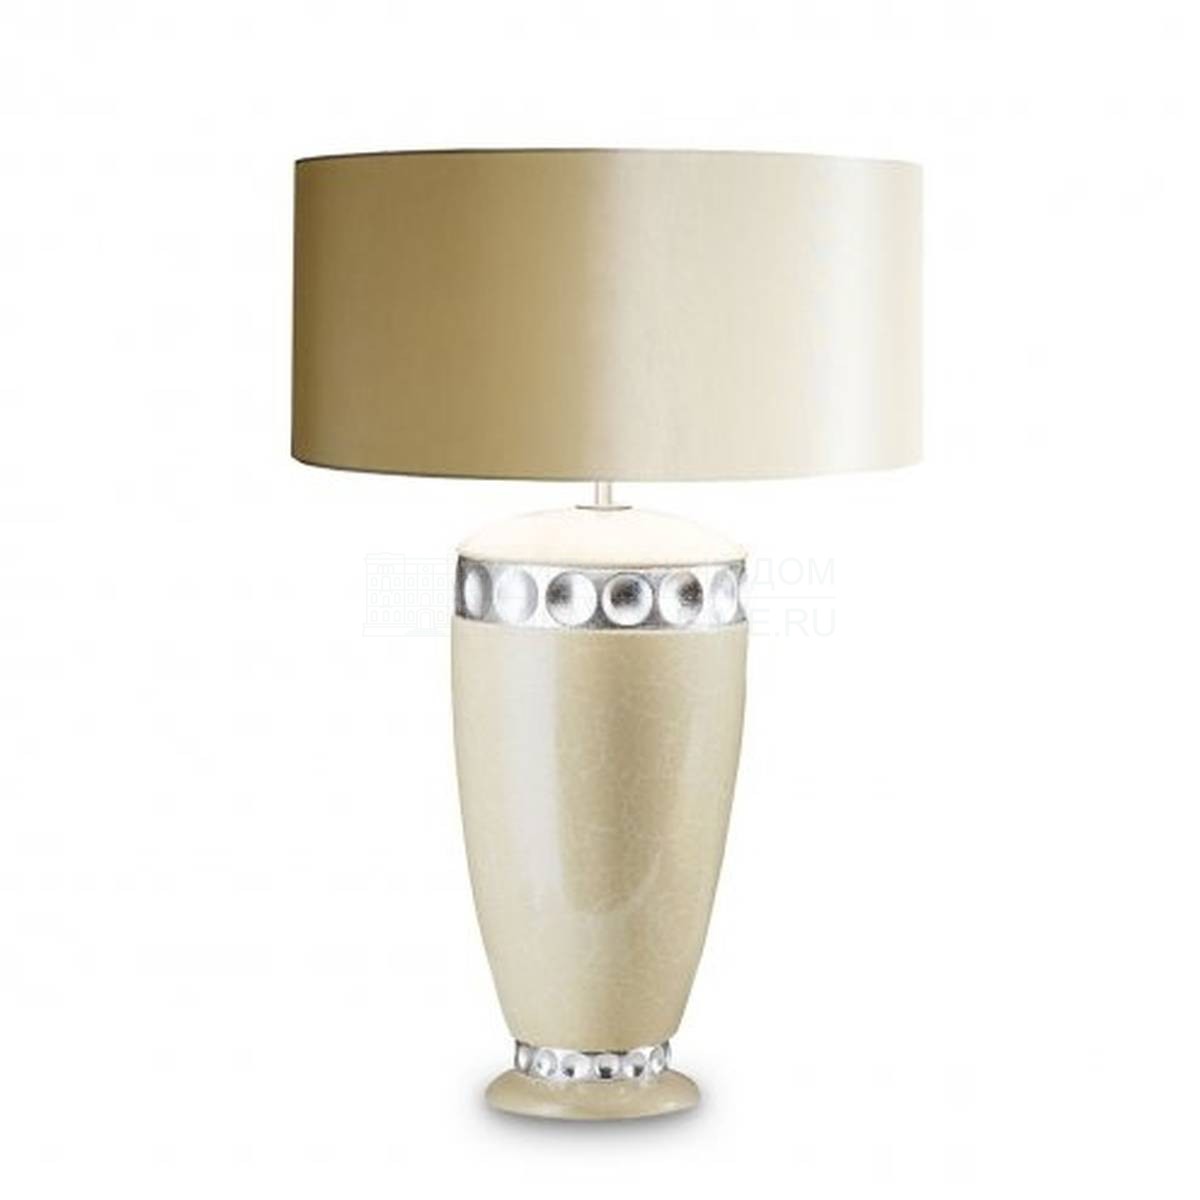 Настольная лампа Peer table lamp из Италии фабрики MARIONI